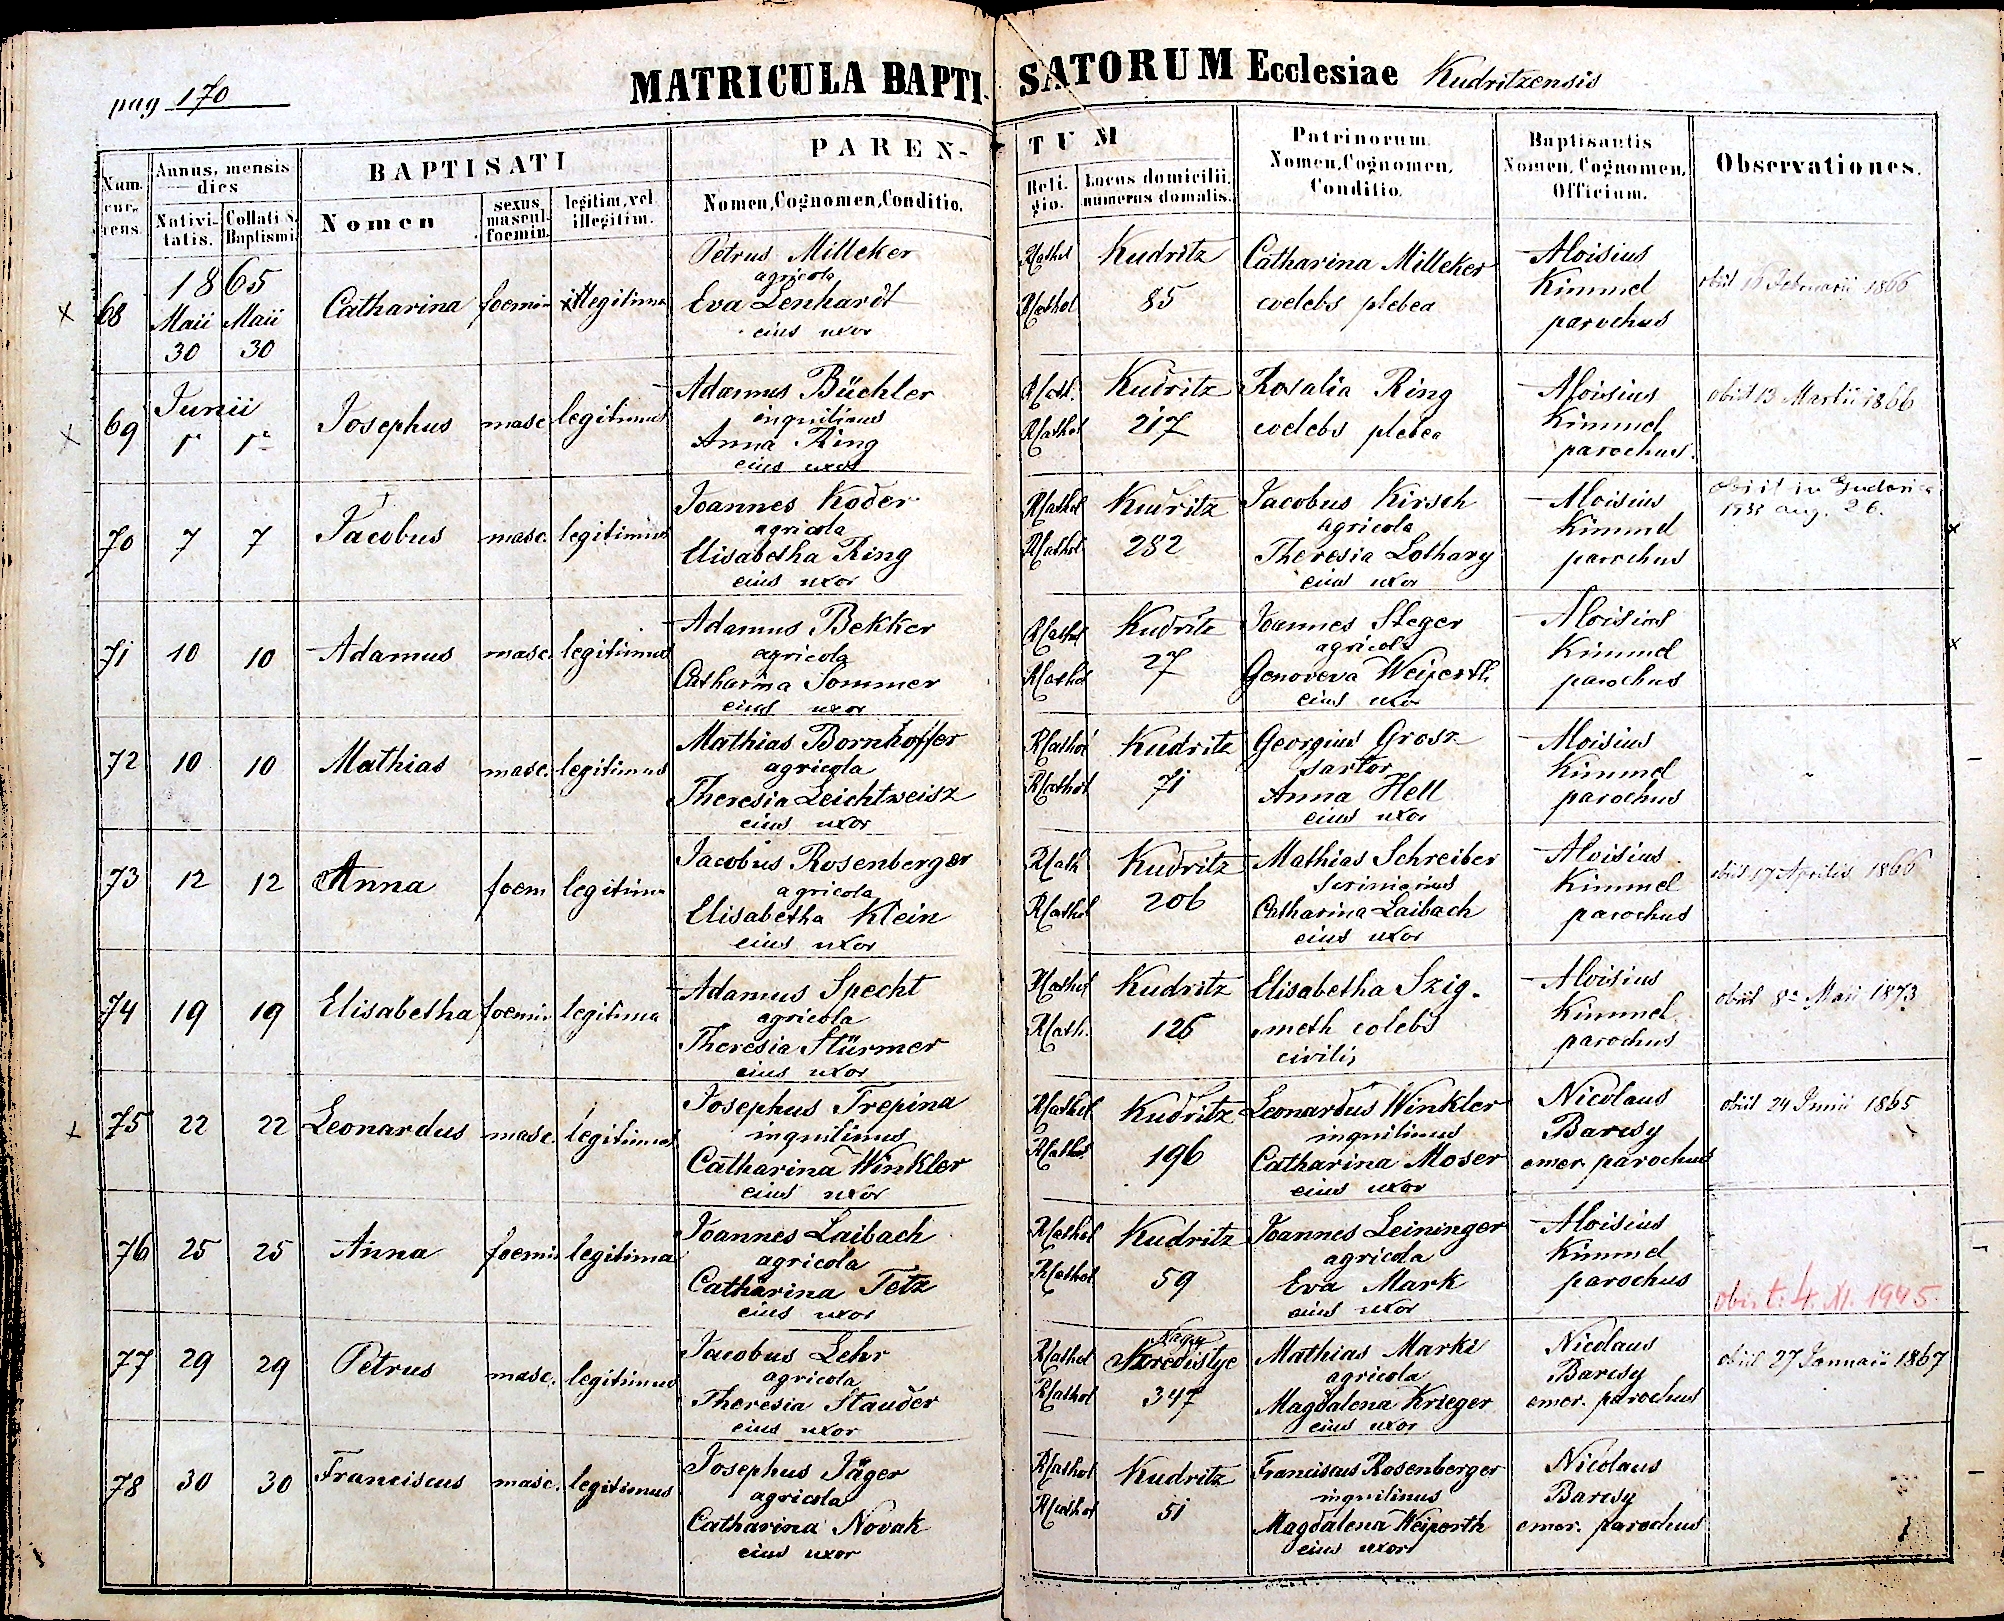 images/church_records/BIRTHS/1852-1870B/170